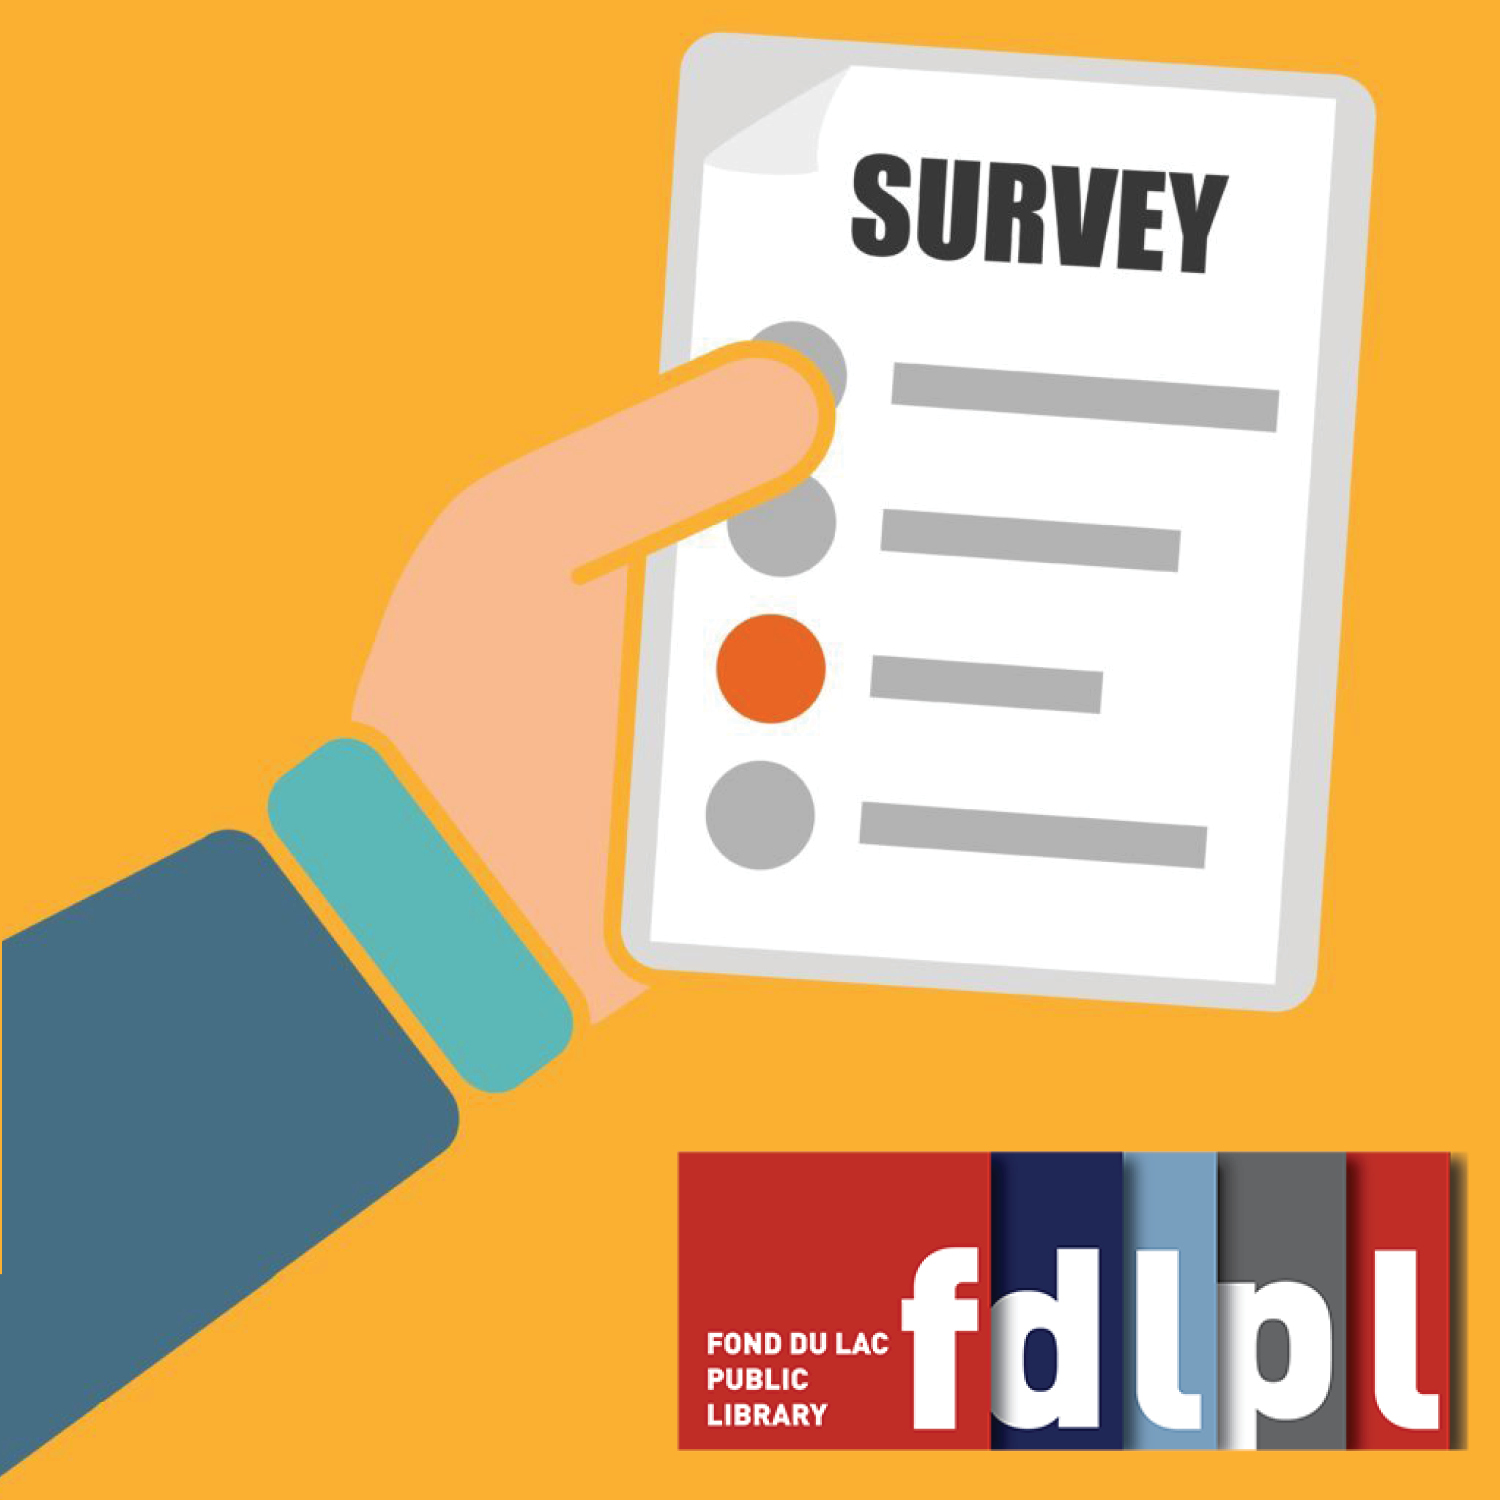 Community invited to help FDLPL with strategic planning survey